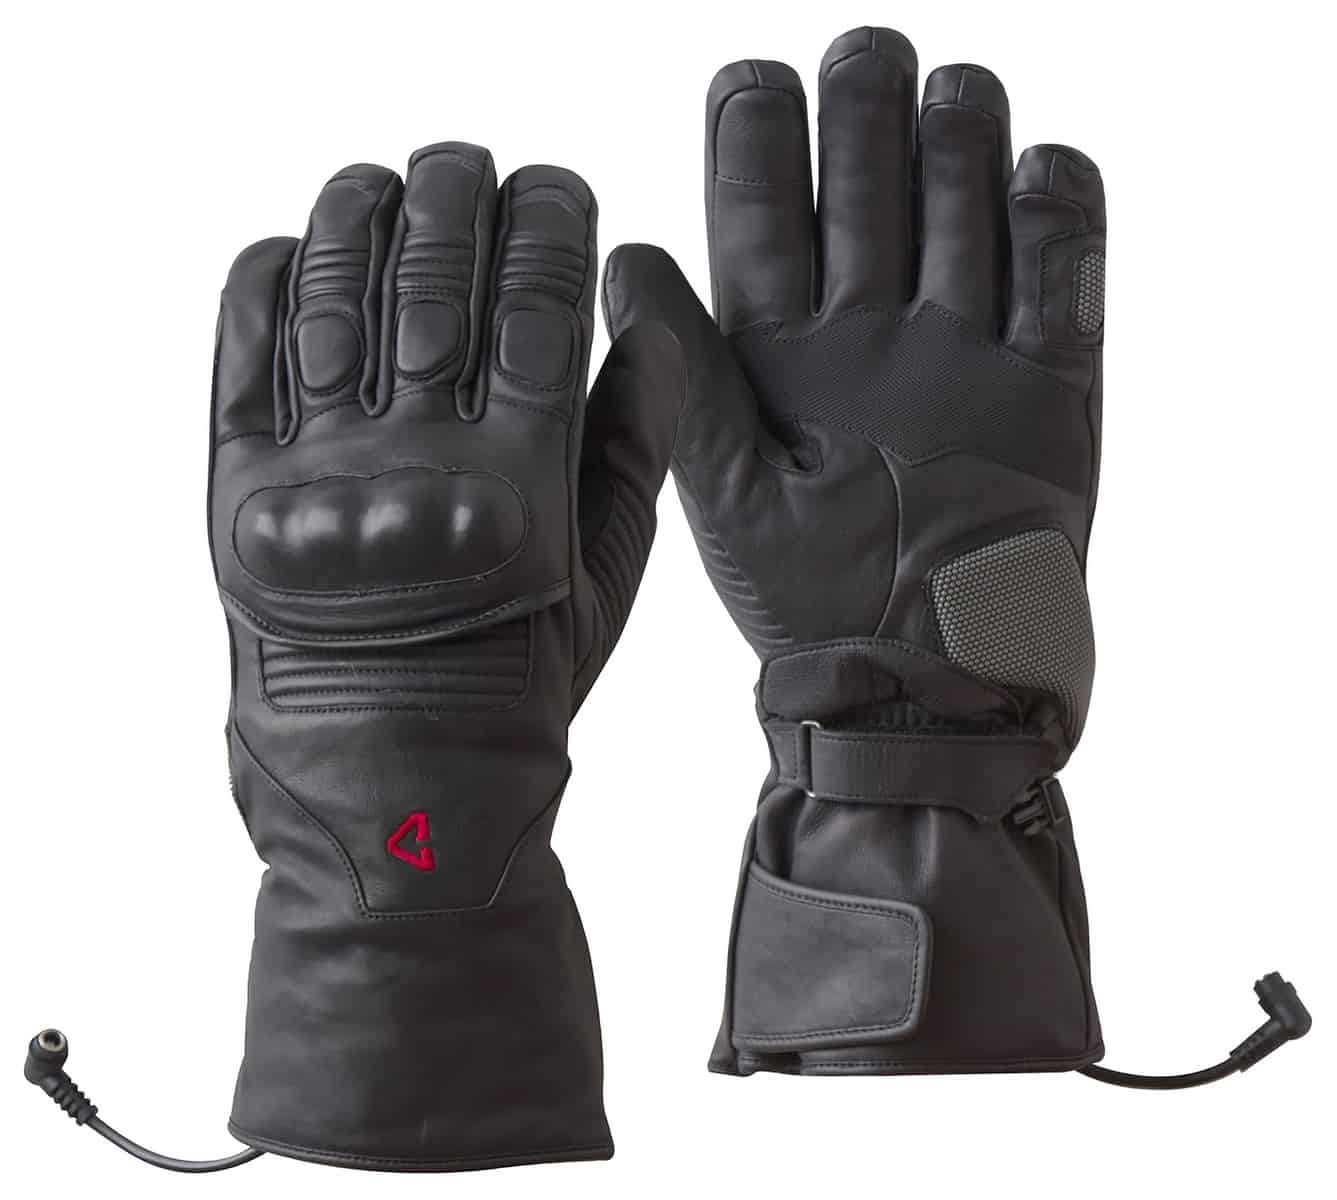 Gerbing Vanguard Heated Gloves